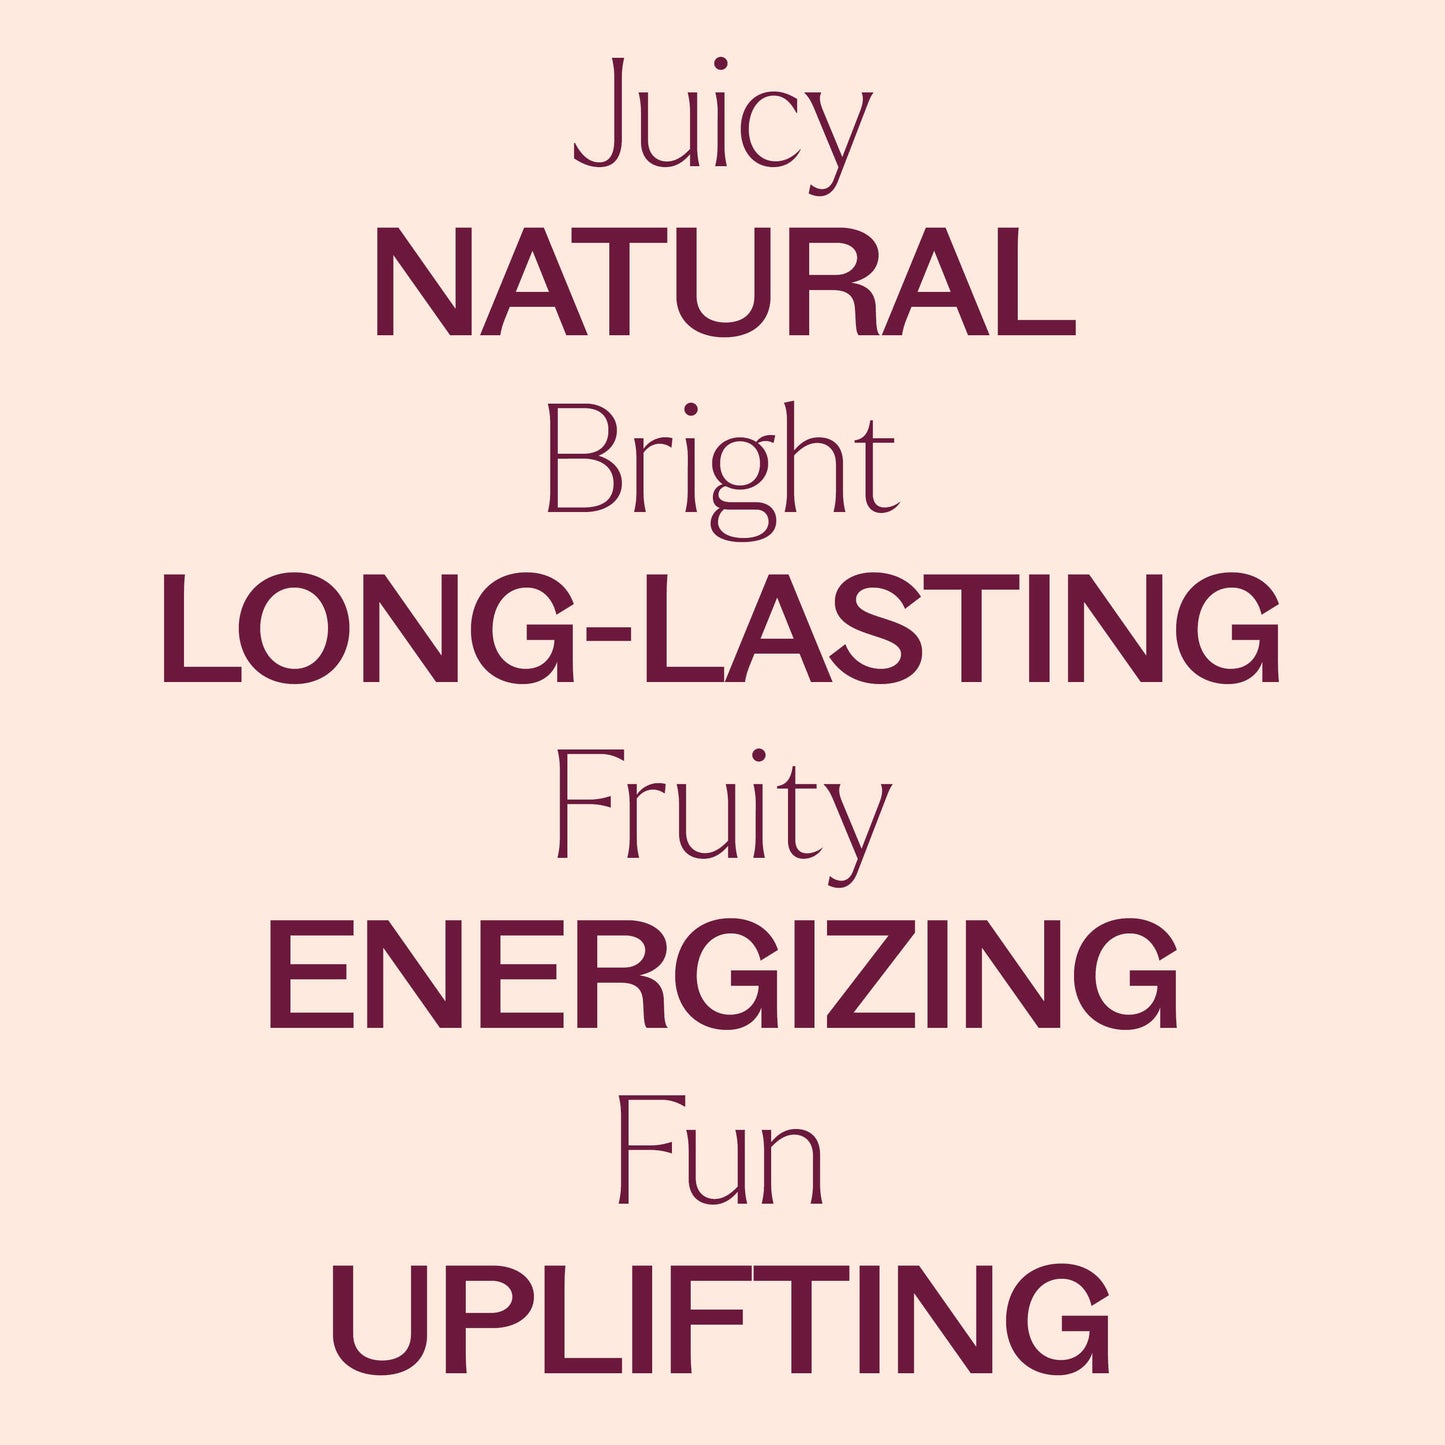 juicy, bright, fruity, fun. natural, long-lasting, energizing, uplifting